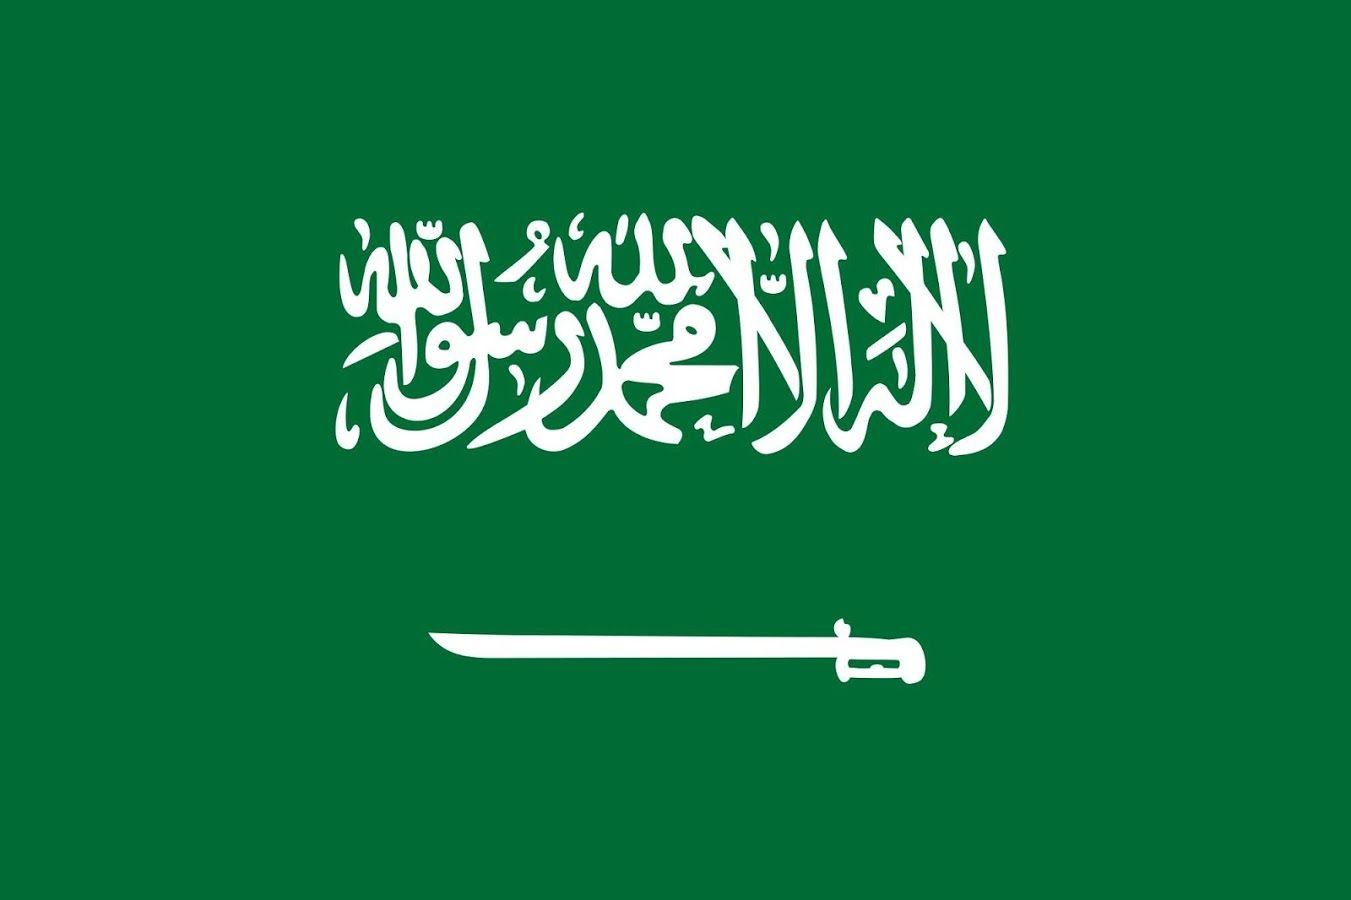 Saudi Arabia Flag Wallpaper Apps on Google Play